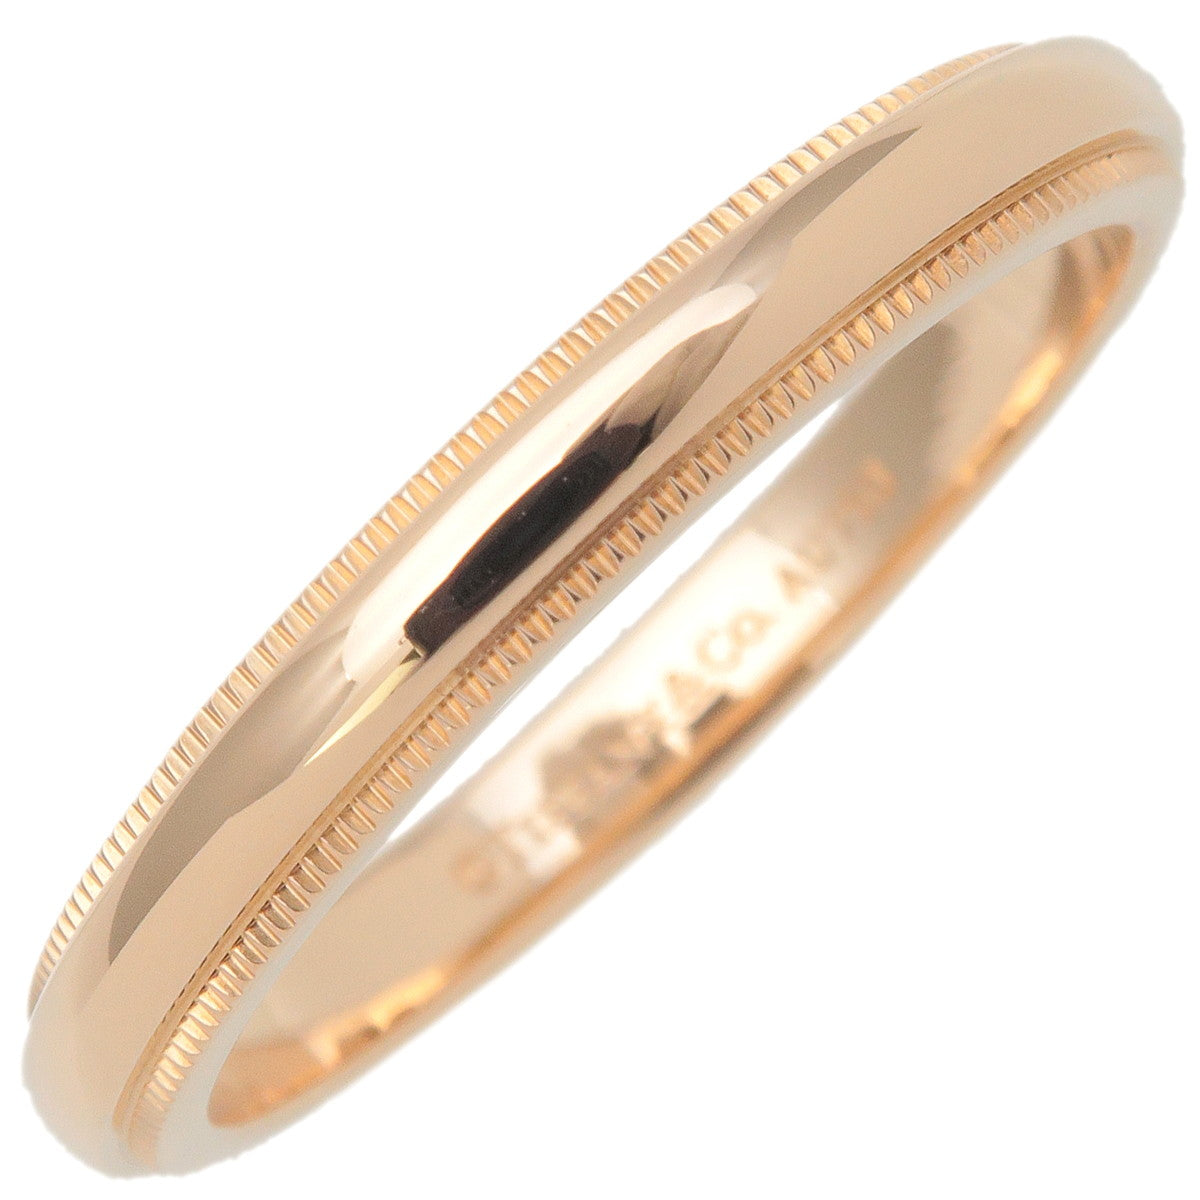 Tiffany&Co.-Milgrain-Band-Ring-K18PG-750-Rose-Gold-US9-9.5-EU60.5